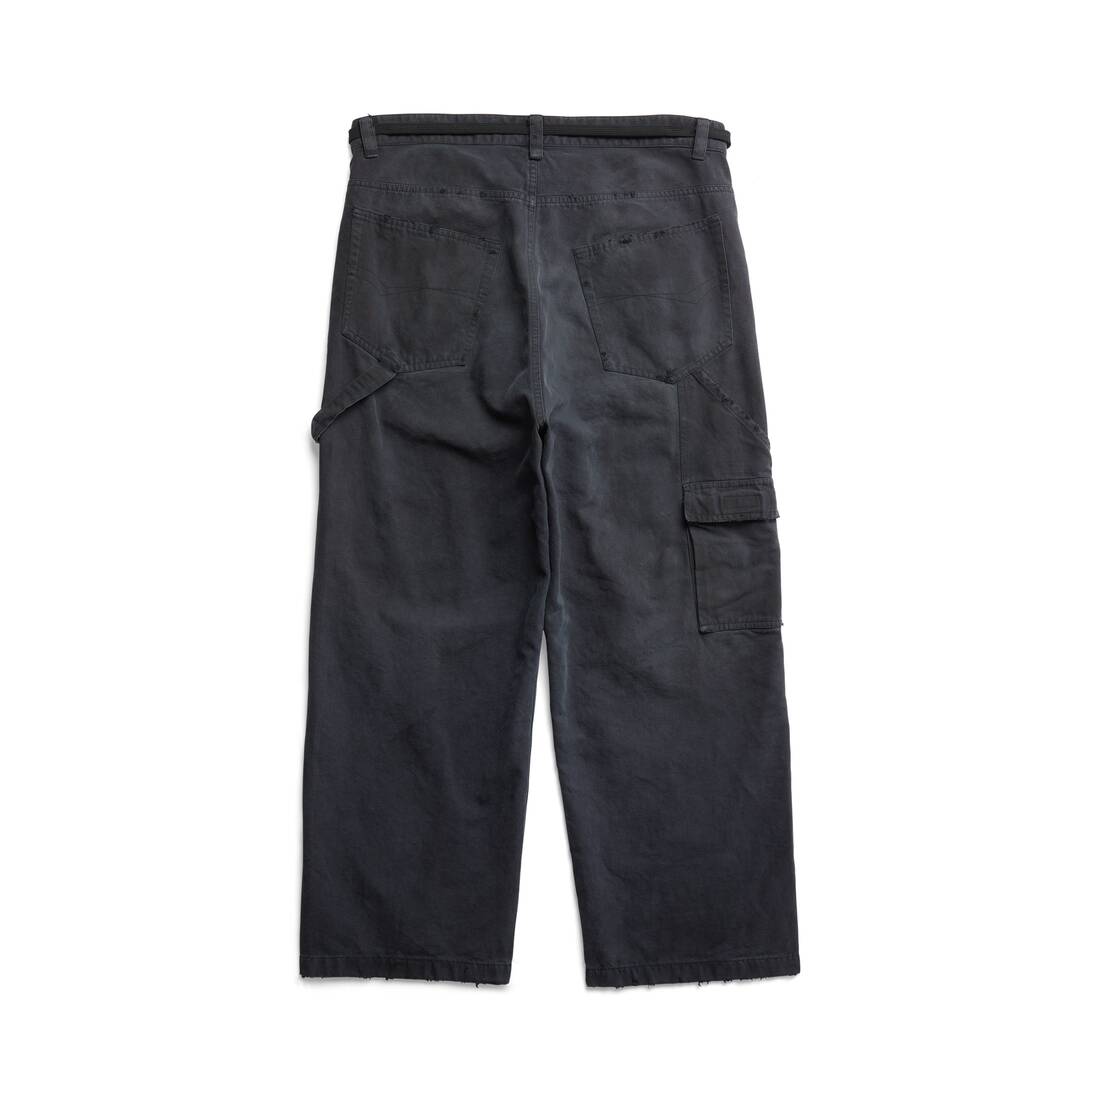 Balenciaga Cropped Skater Pants | Man Pants Black L | MILANSTYLE.COM